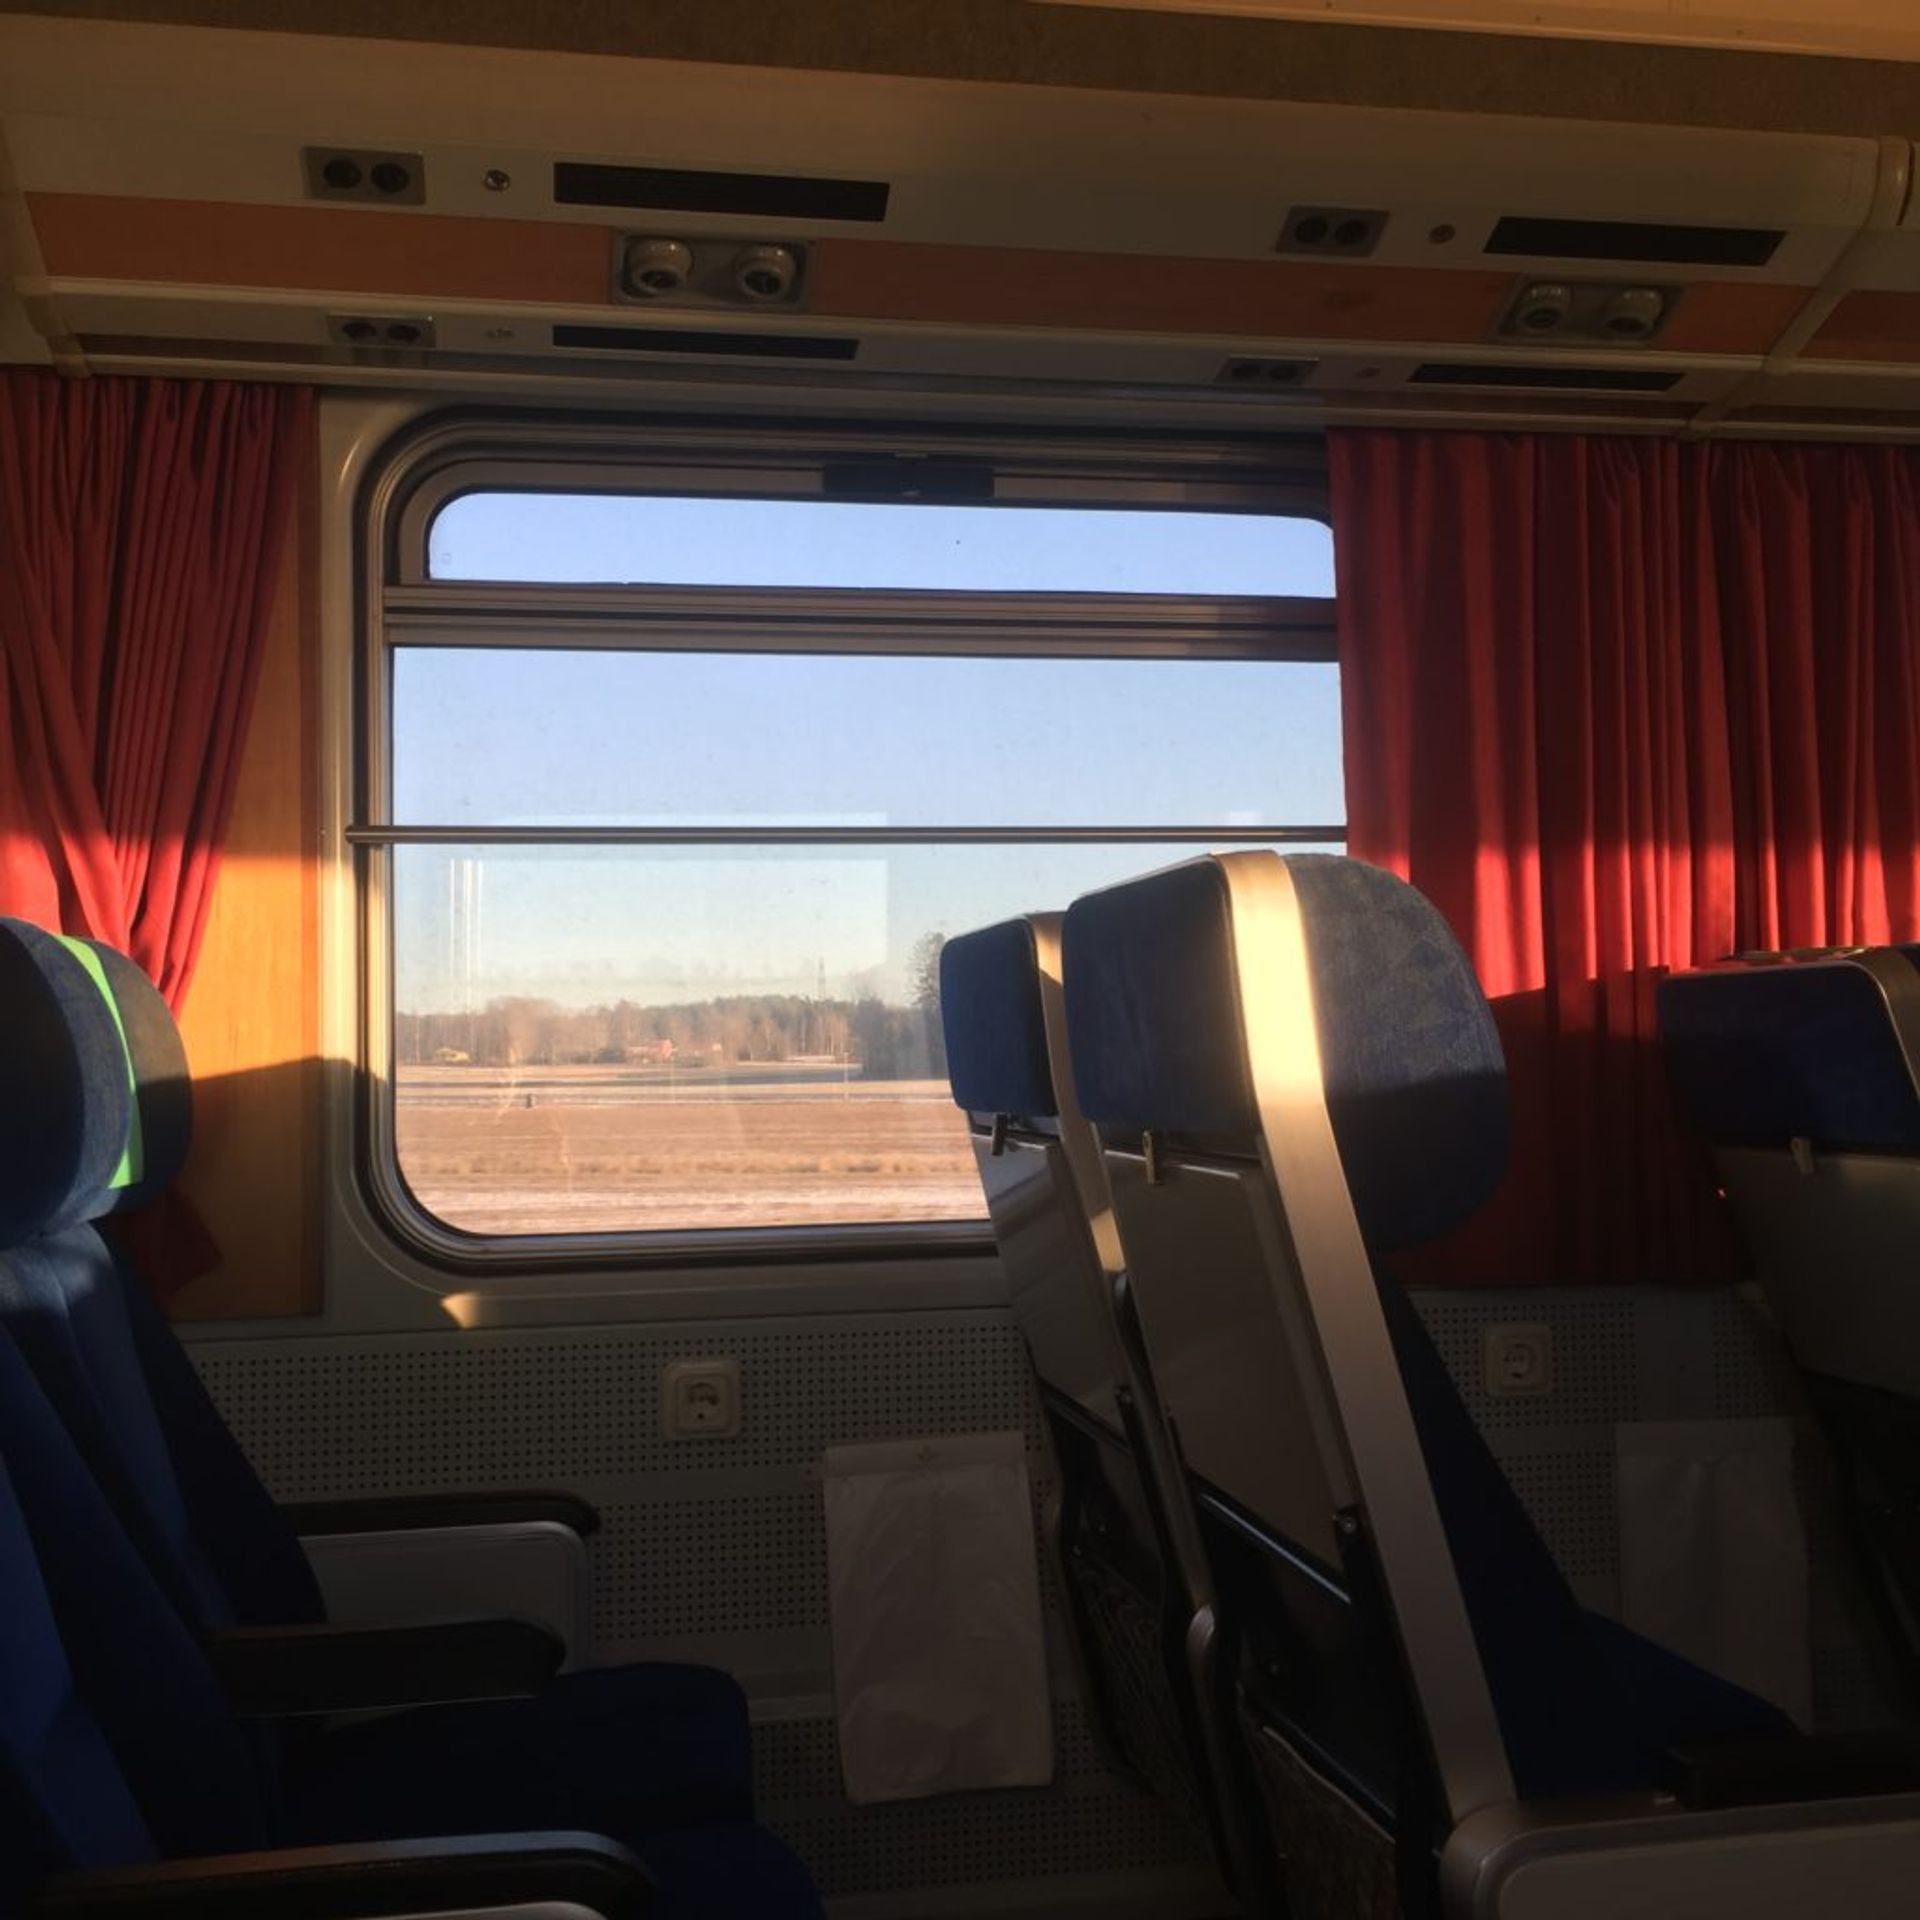 Train in the sun